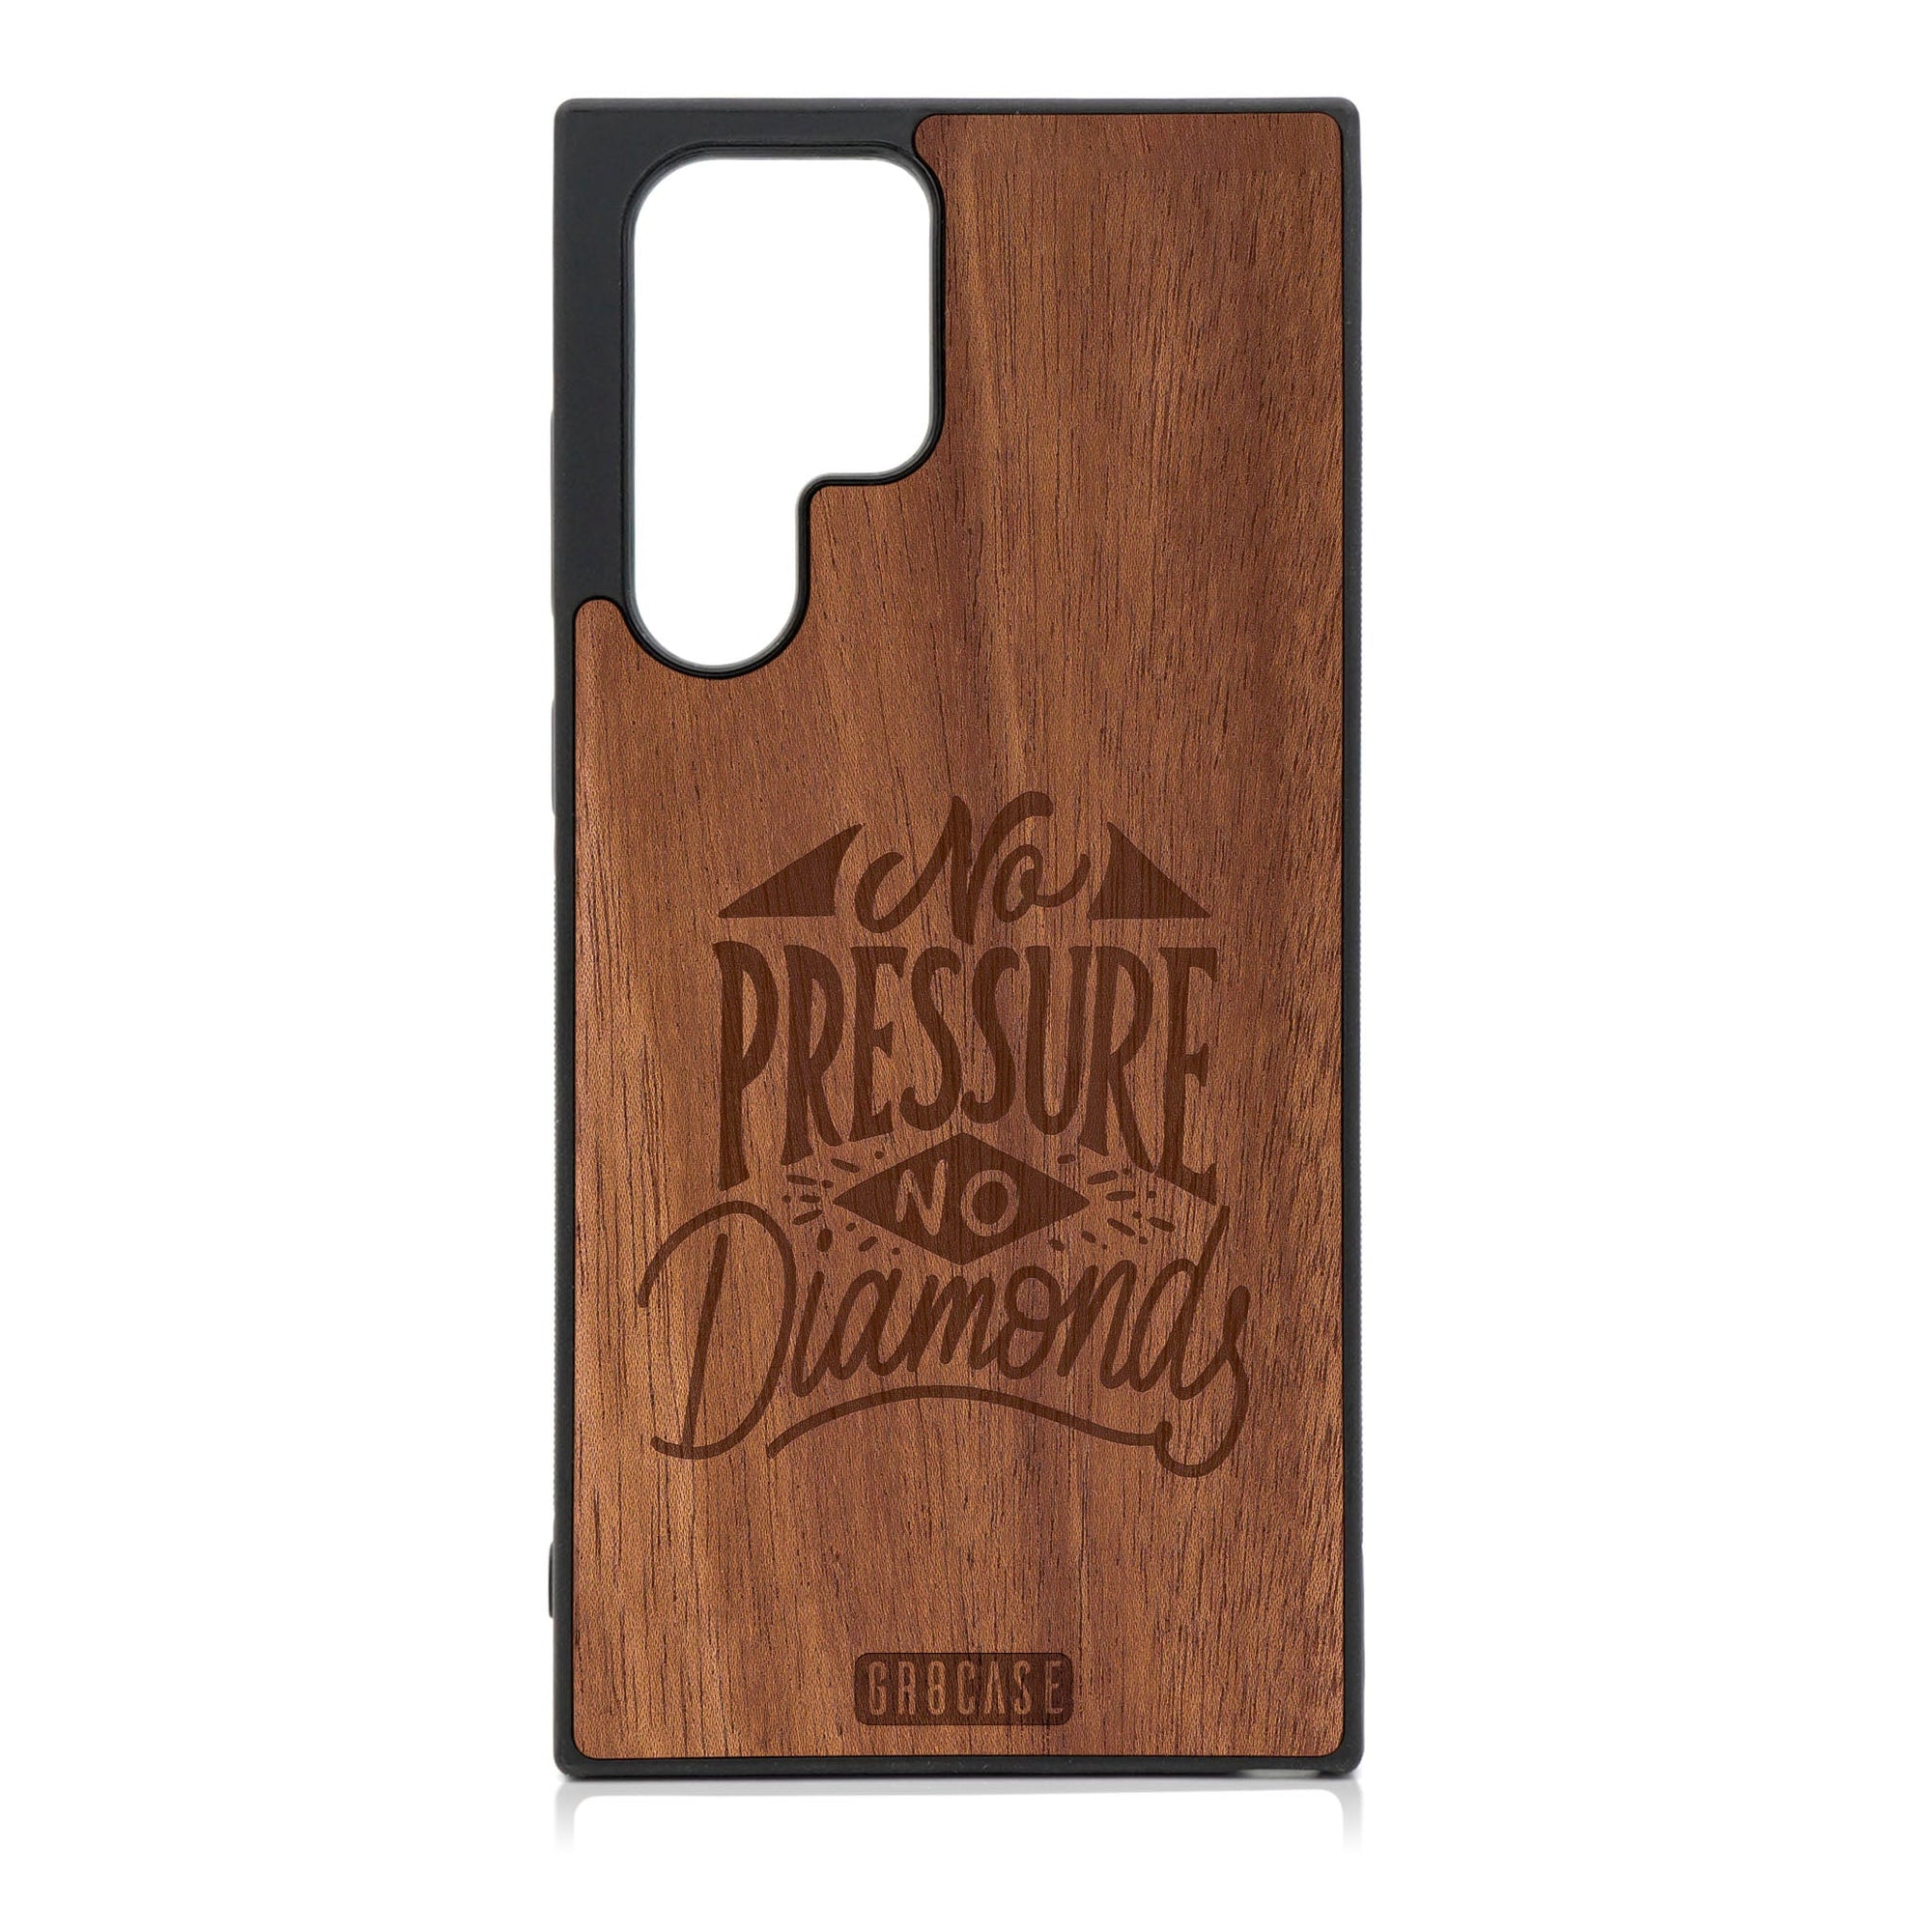 No Pressure No Diamonds Design Wood Phone Case For Galaxy S23 Ultra